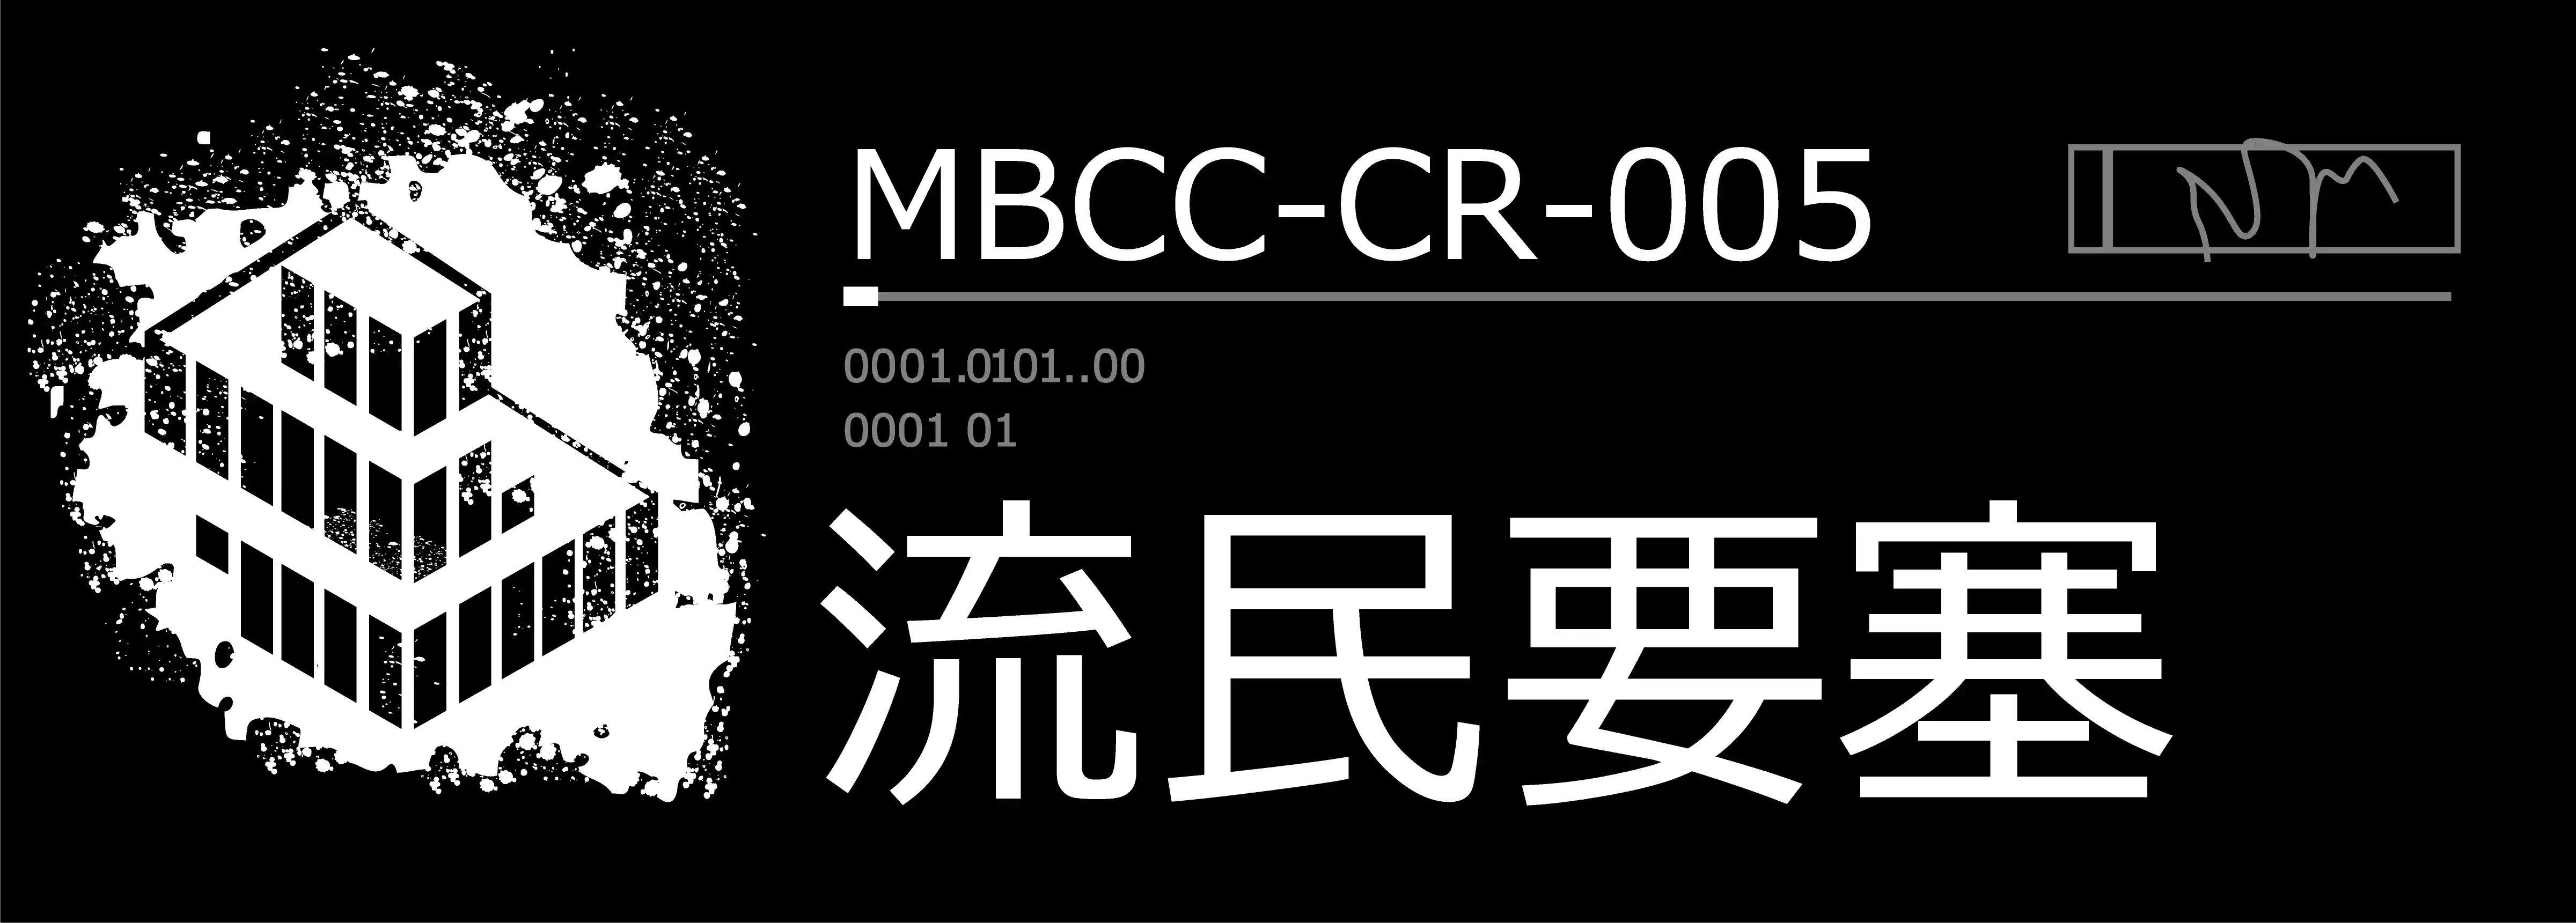 MBCC-CR-005.png